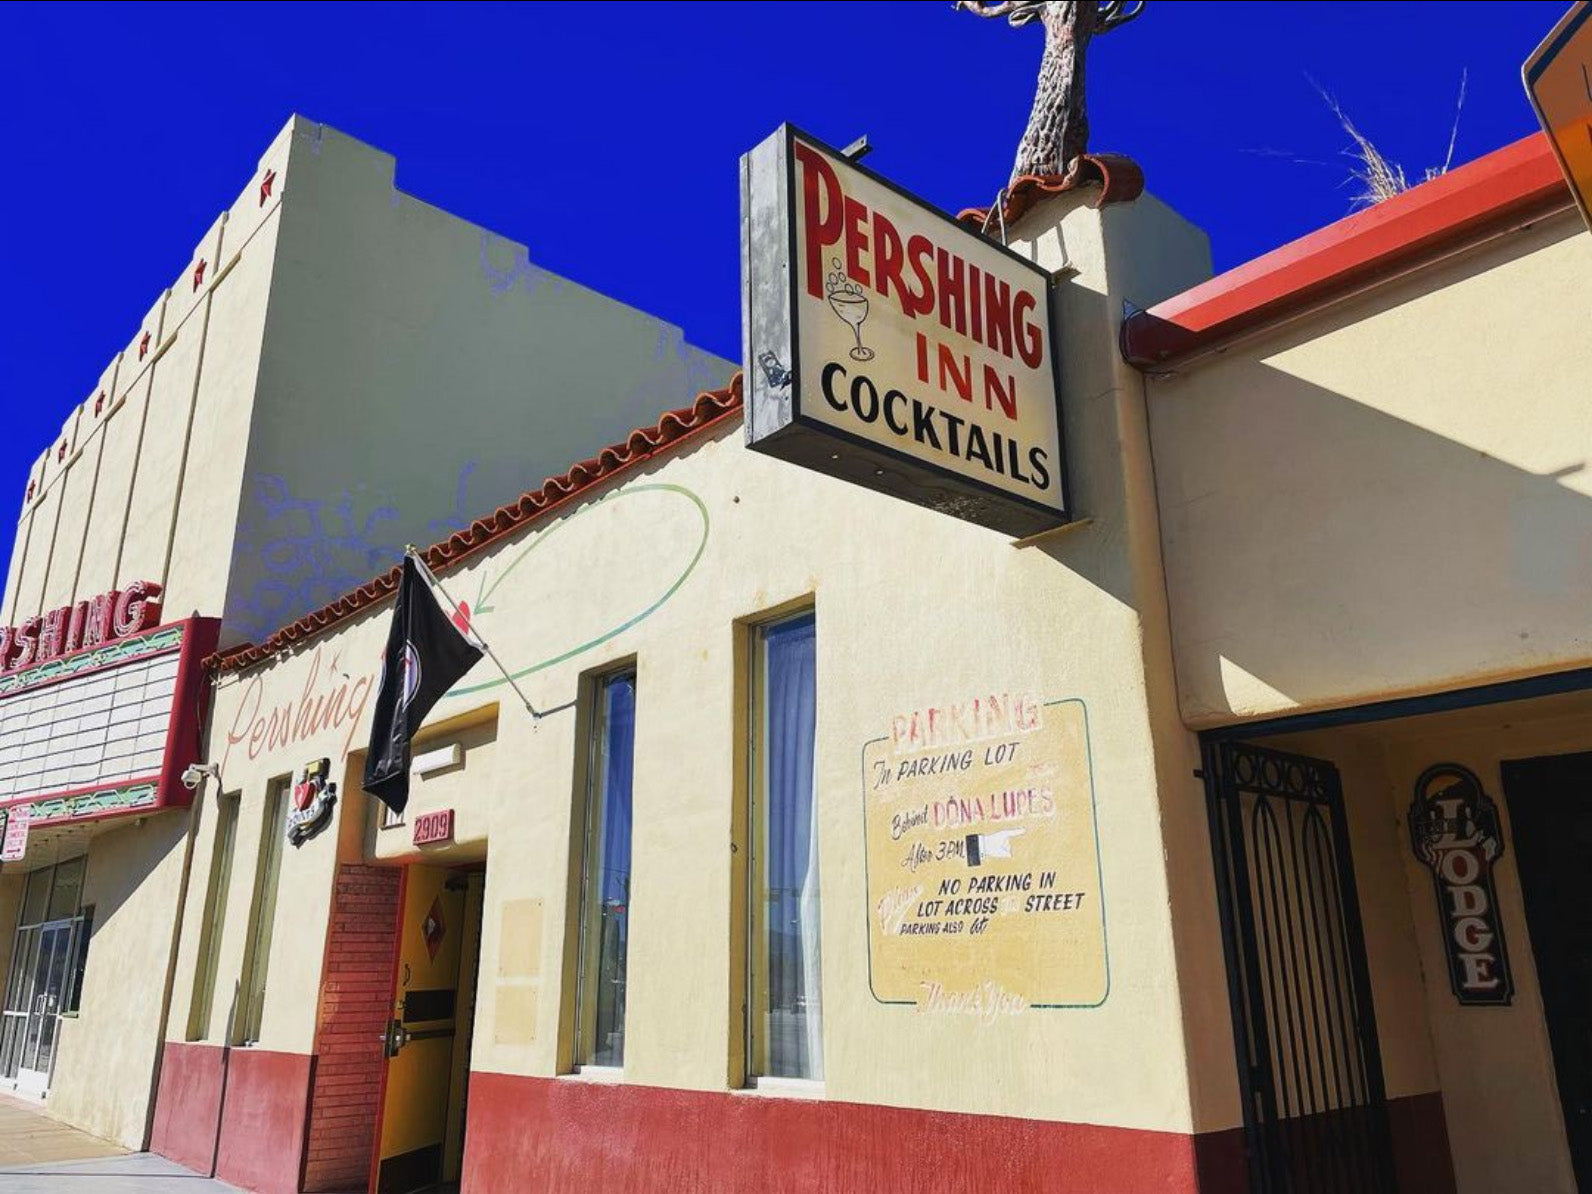 The Pershing Inn - A Once Classic Bar